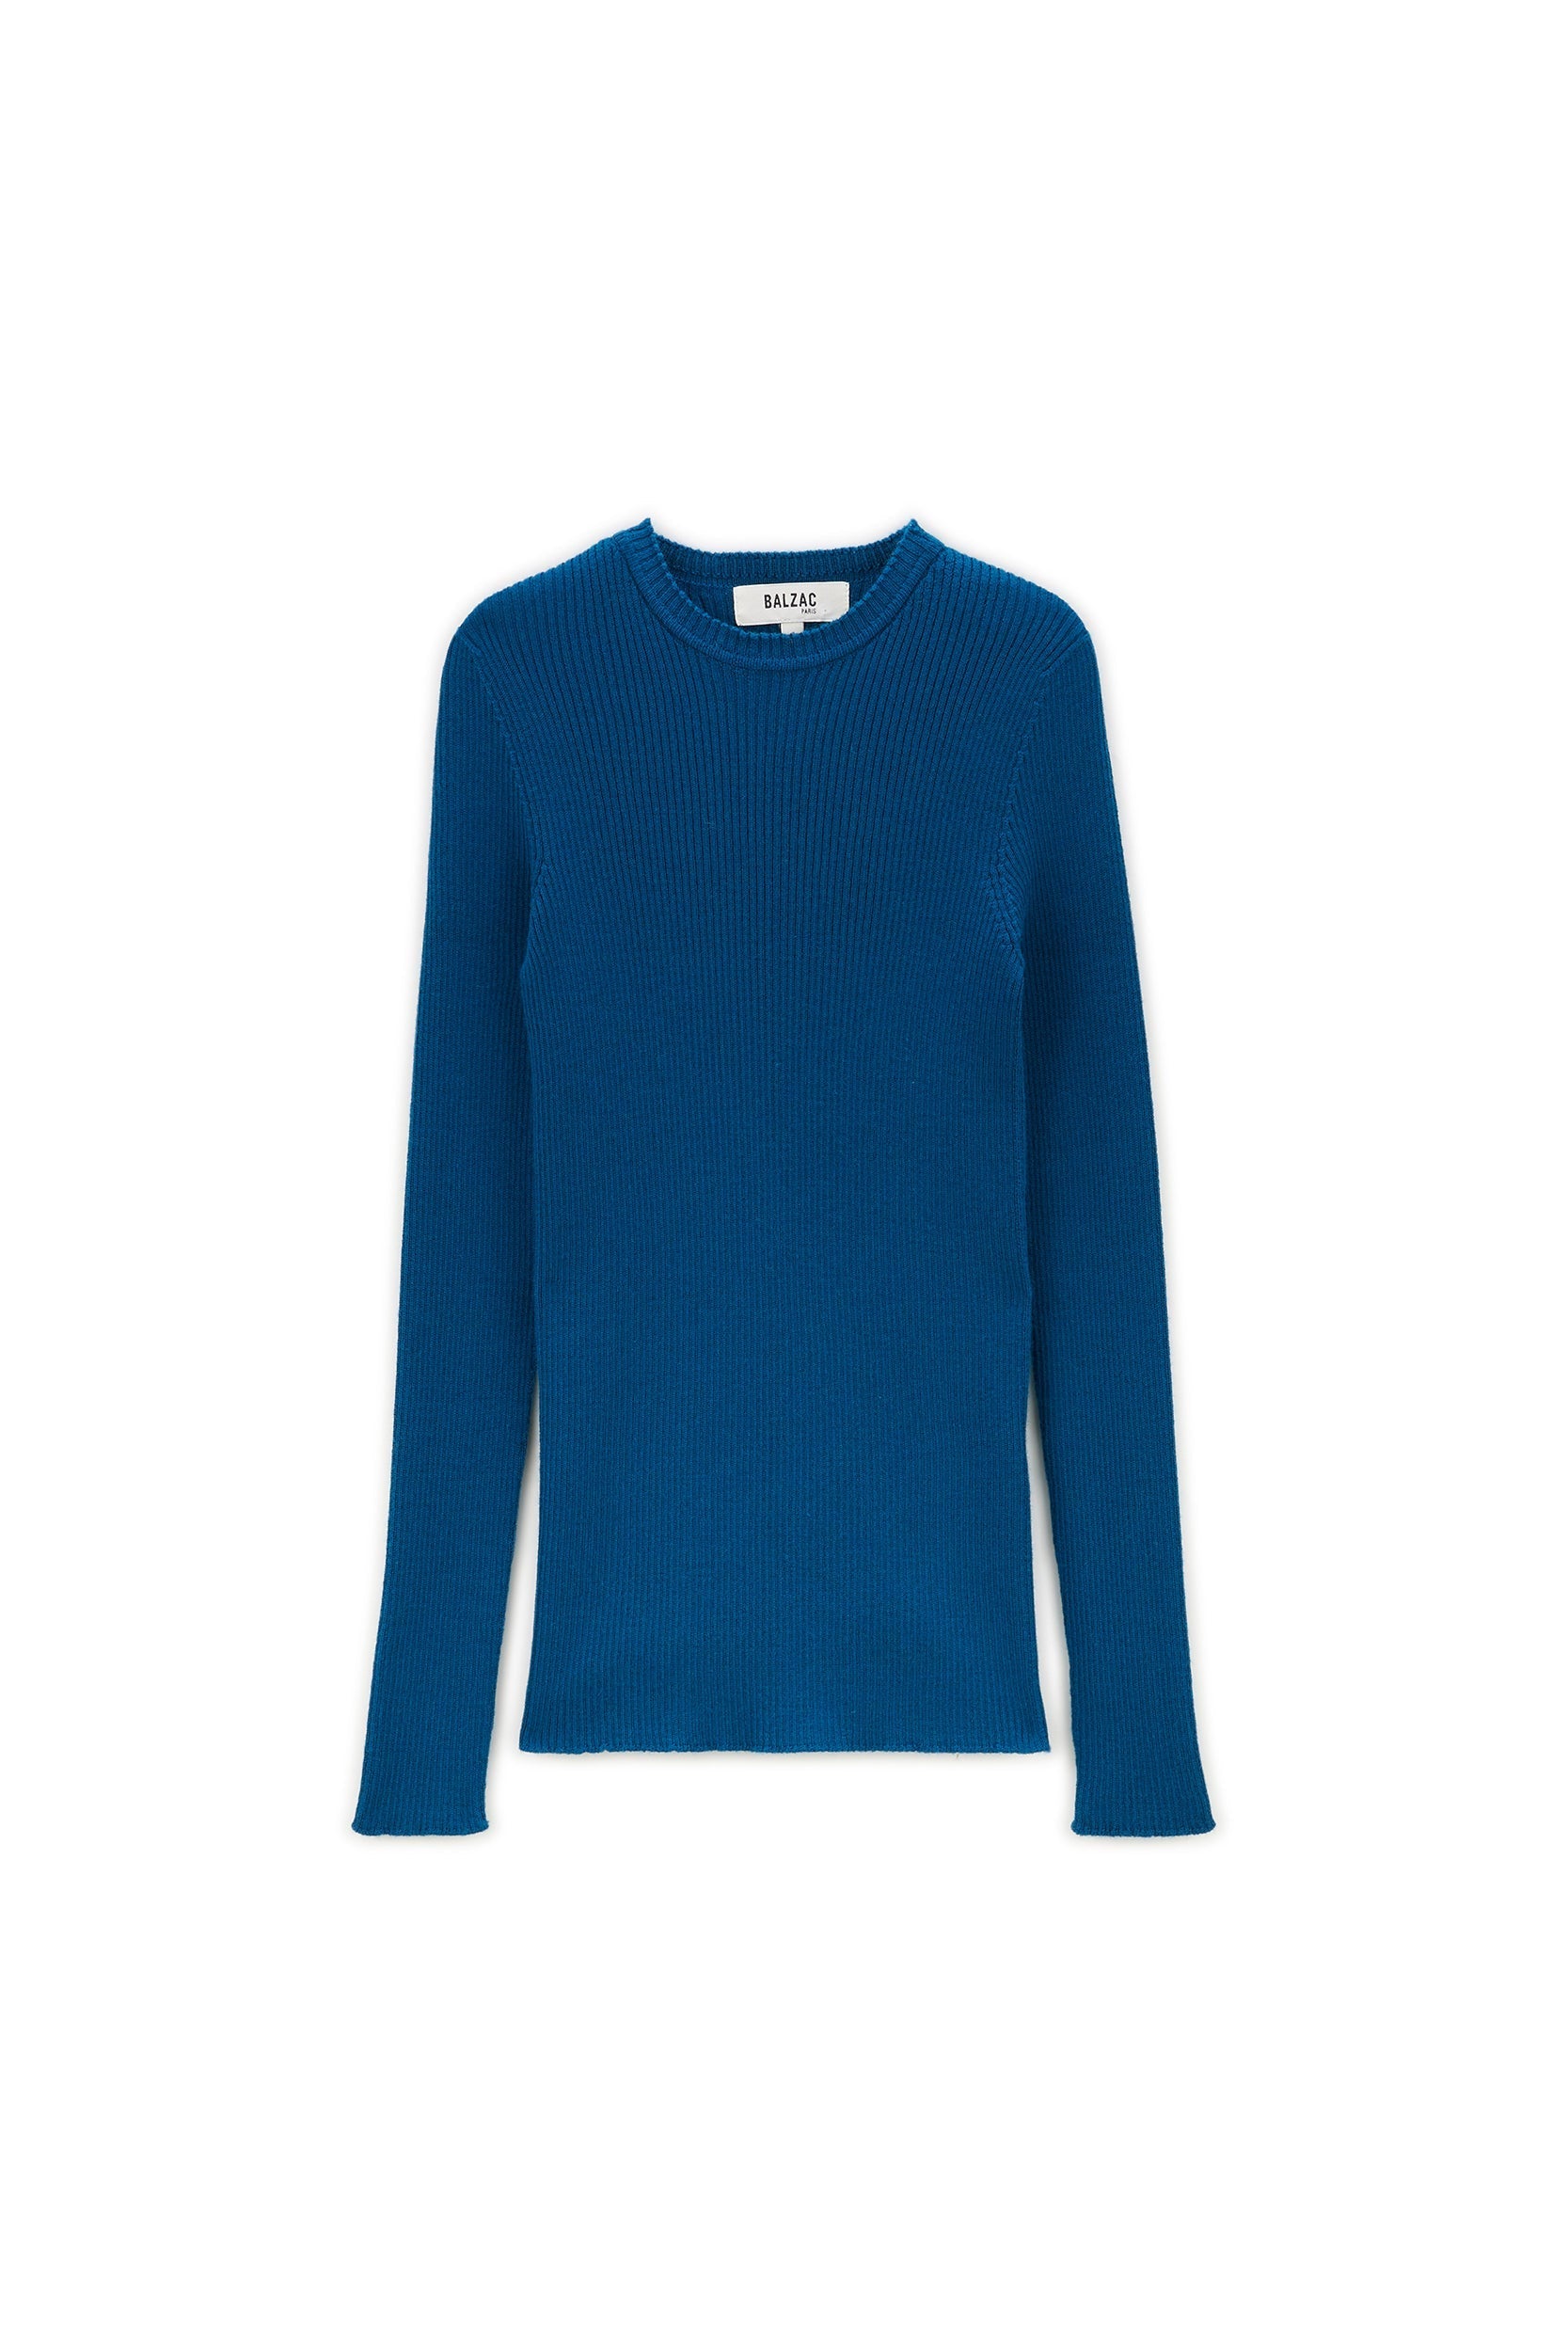 Duck blue Clafoutis sweater